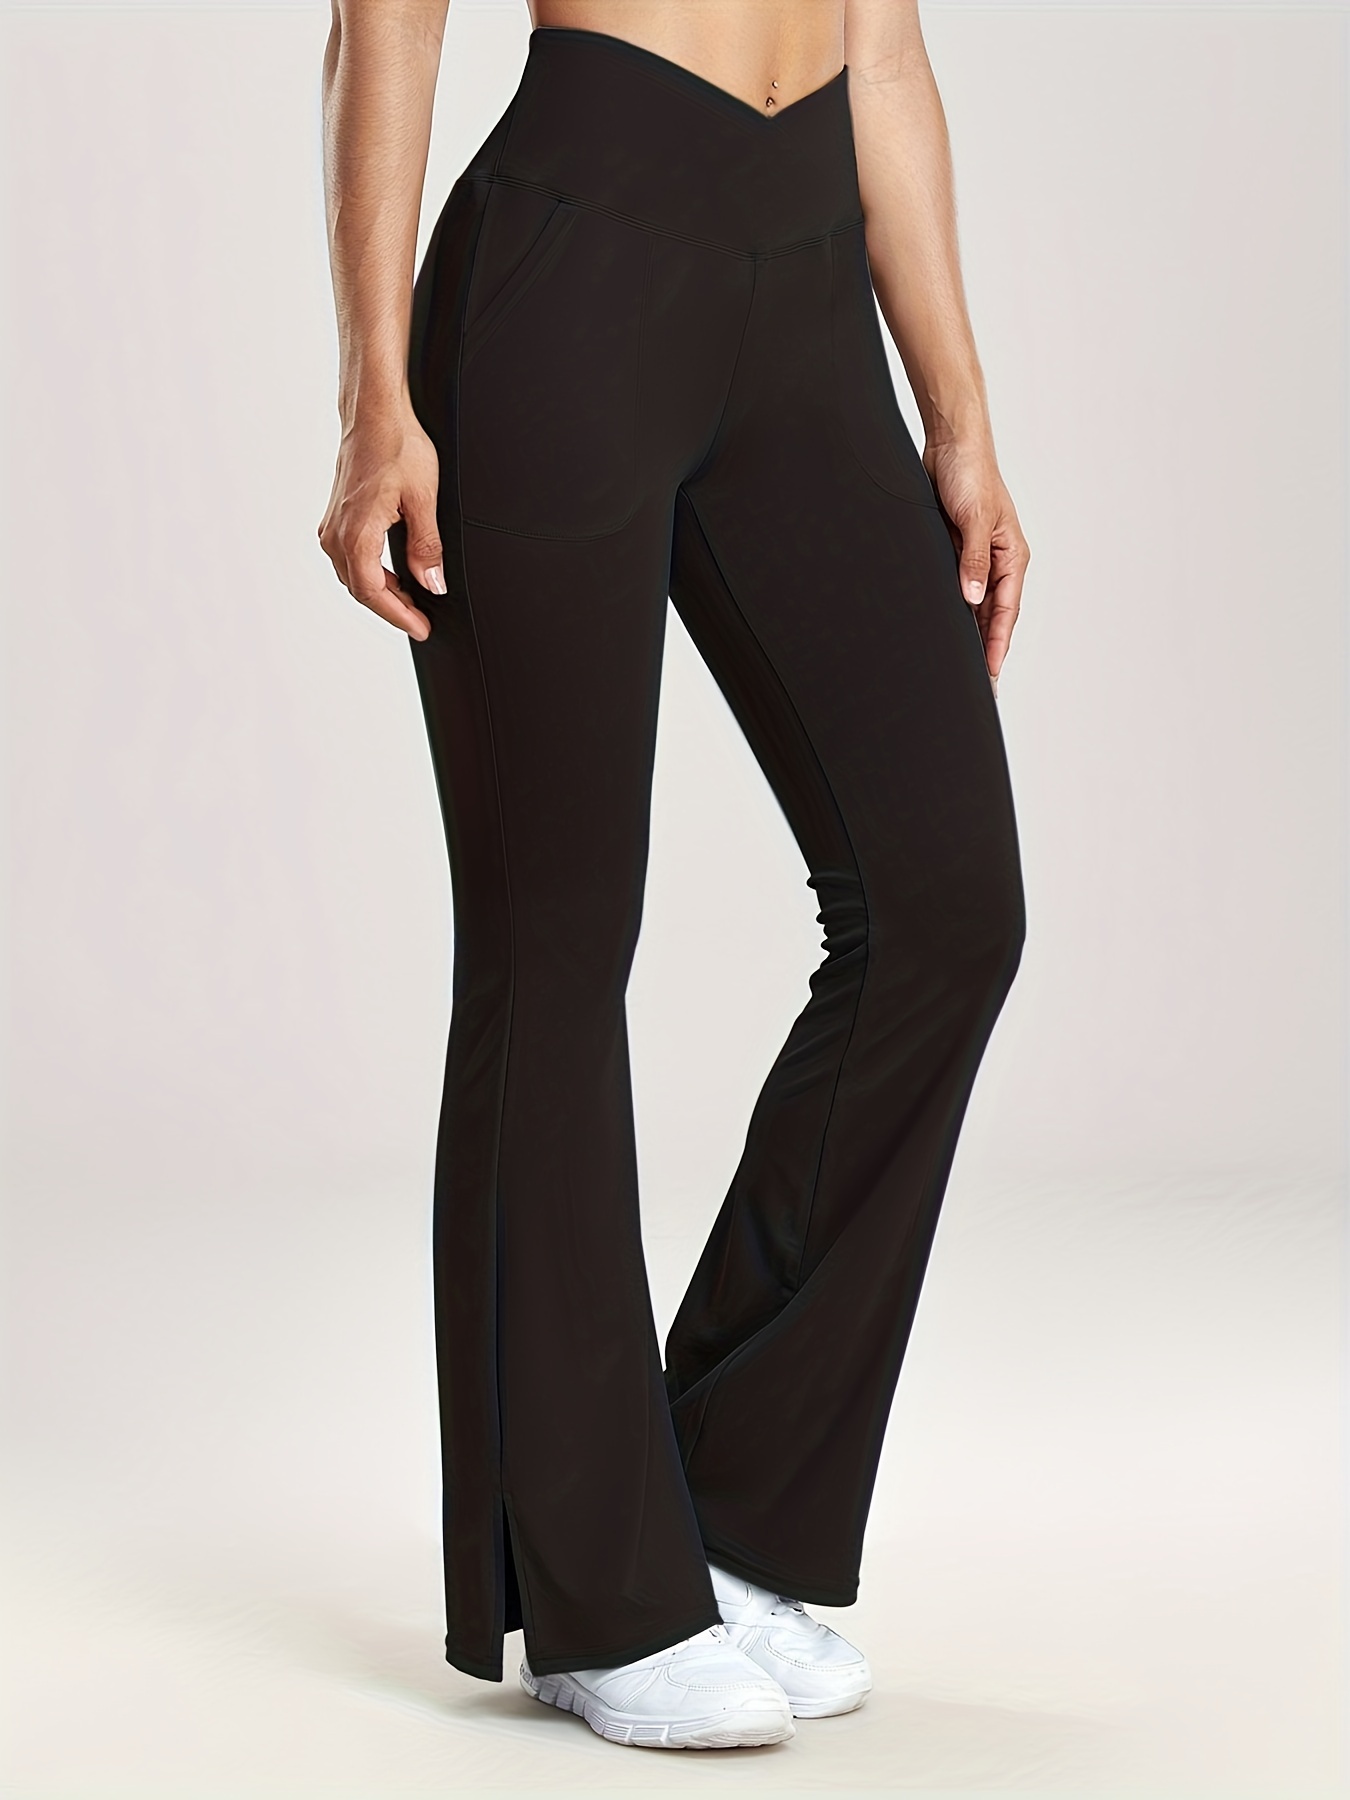 Black, XL) Women Bootcut Yoga Pants Bootleg Flared Trousers Casual